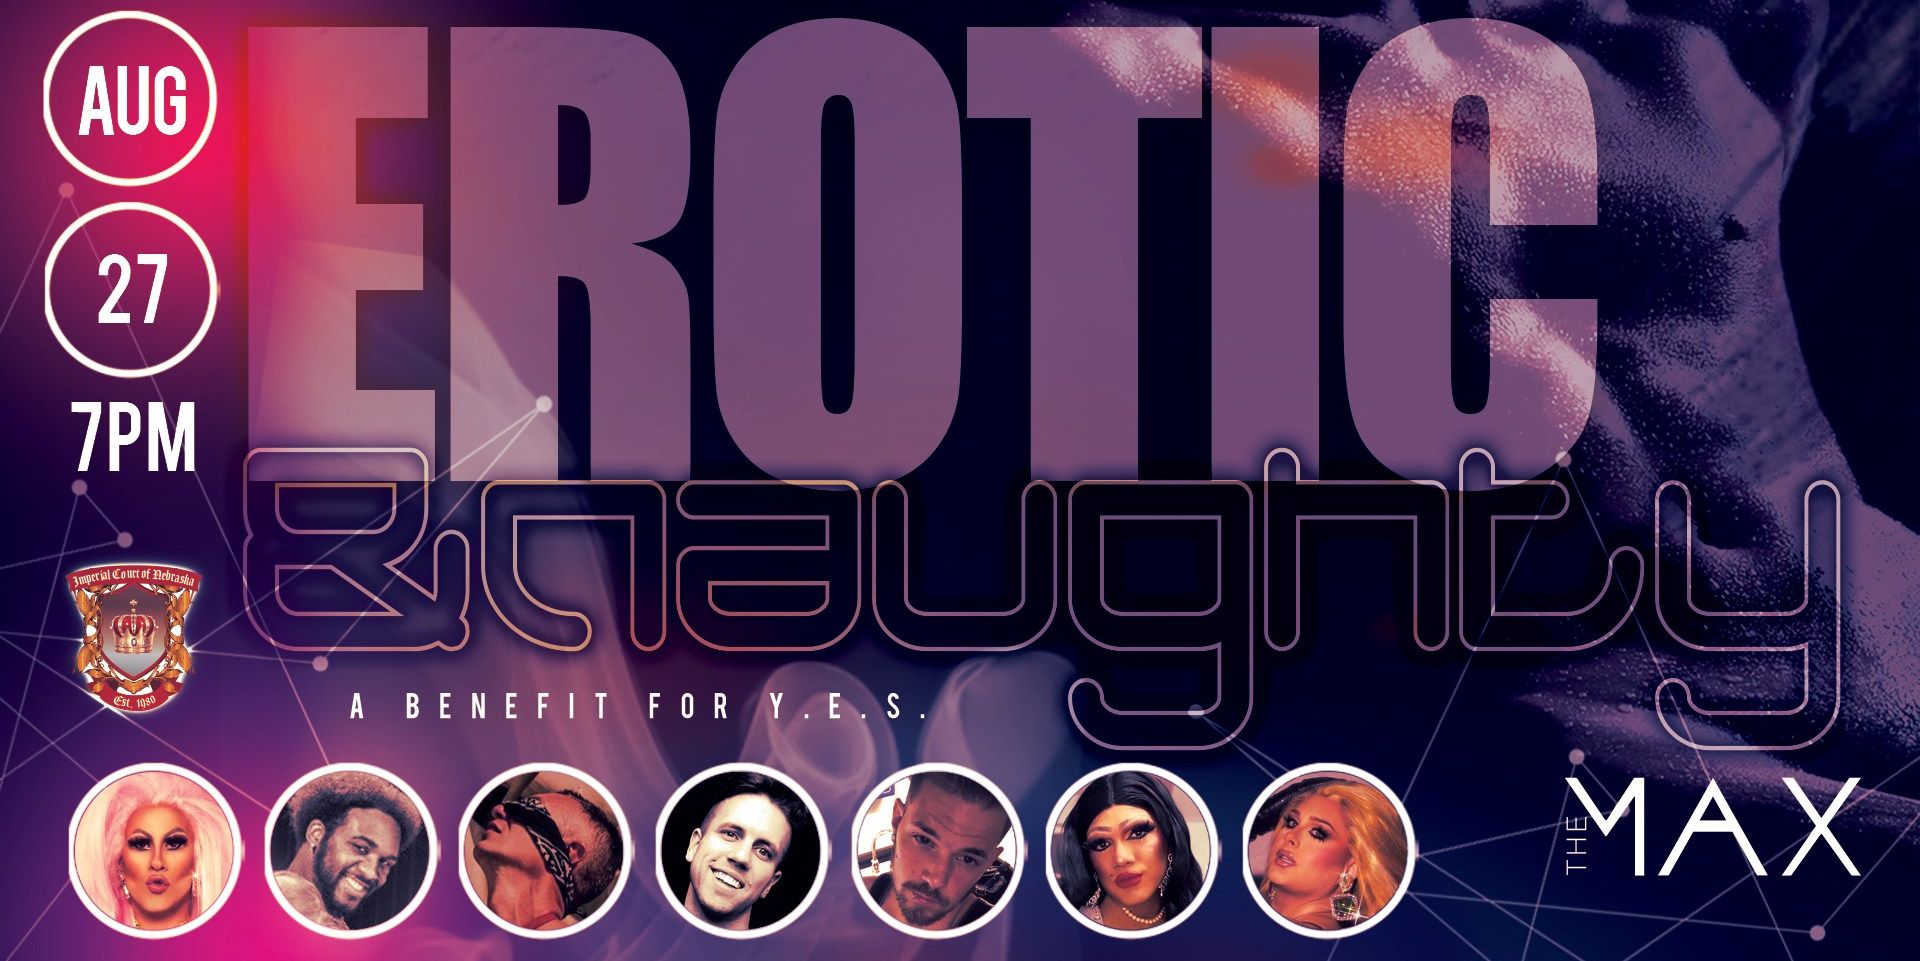 Erotic & Naughty promotional image